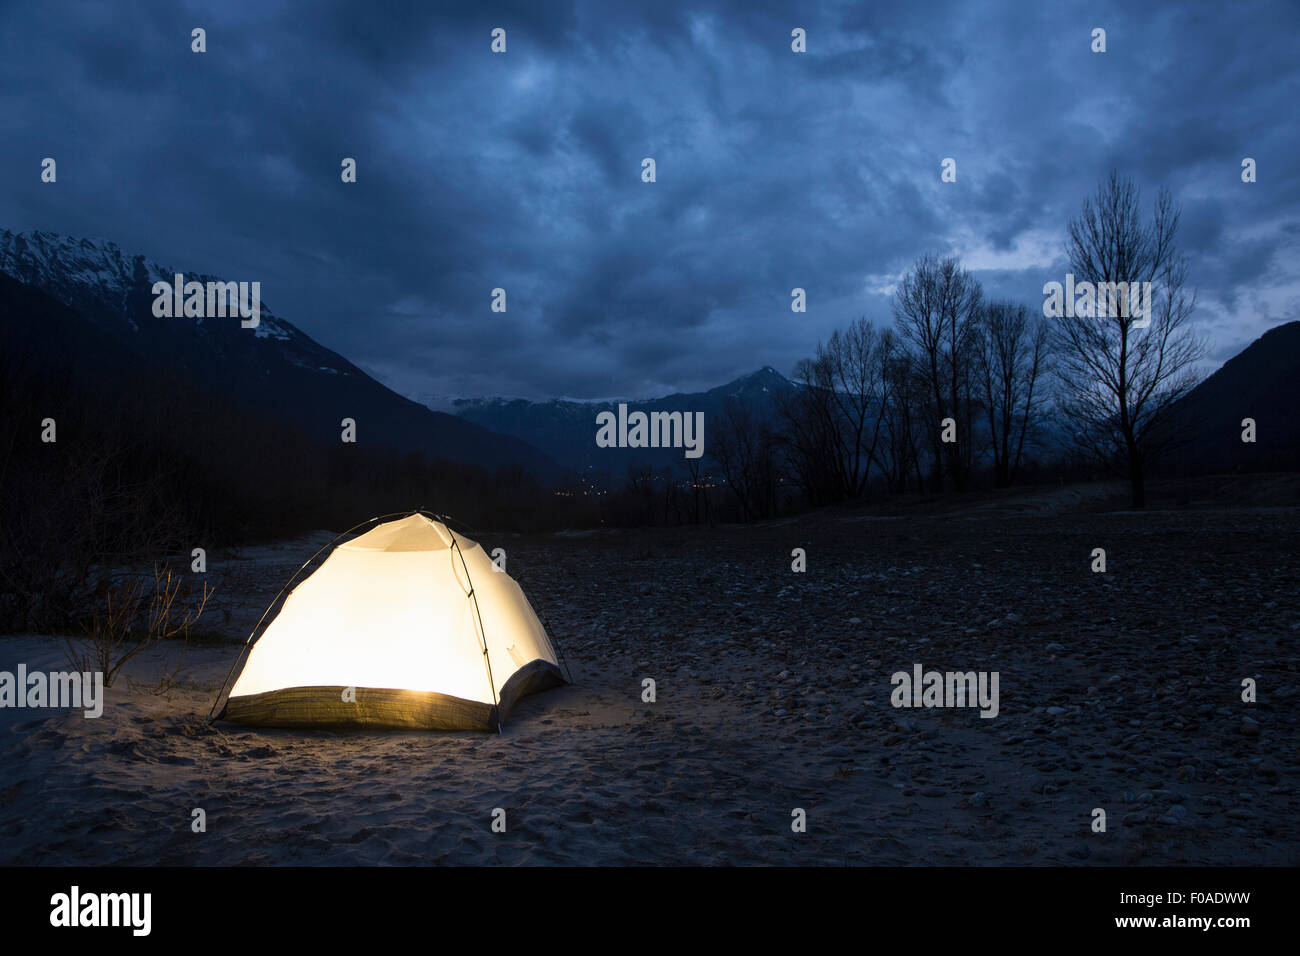 Tent illuminated at night, Premosello, Verbania, Piedmonte, Italy Stock Photo